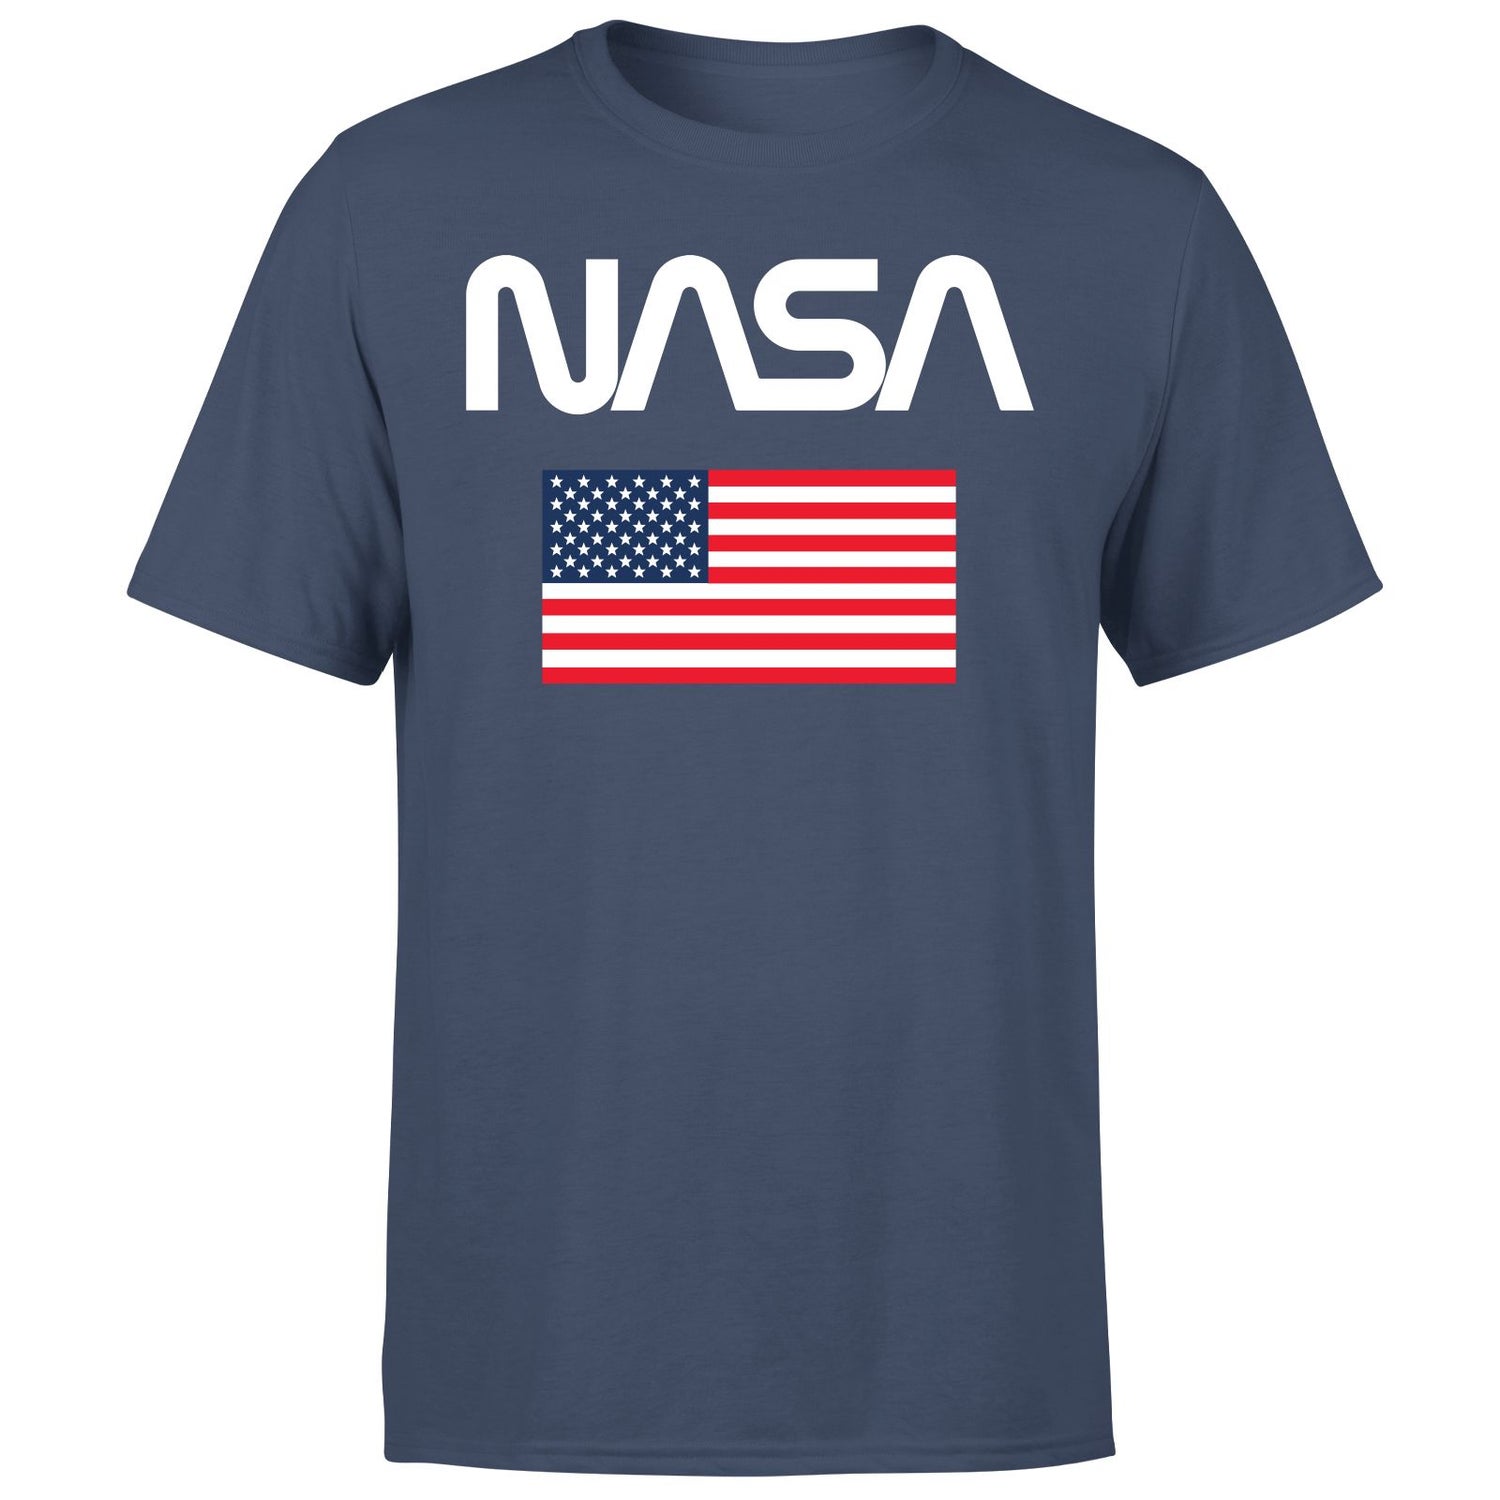 NASA Flag Unisex T-Shirt - Navy